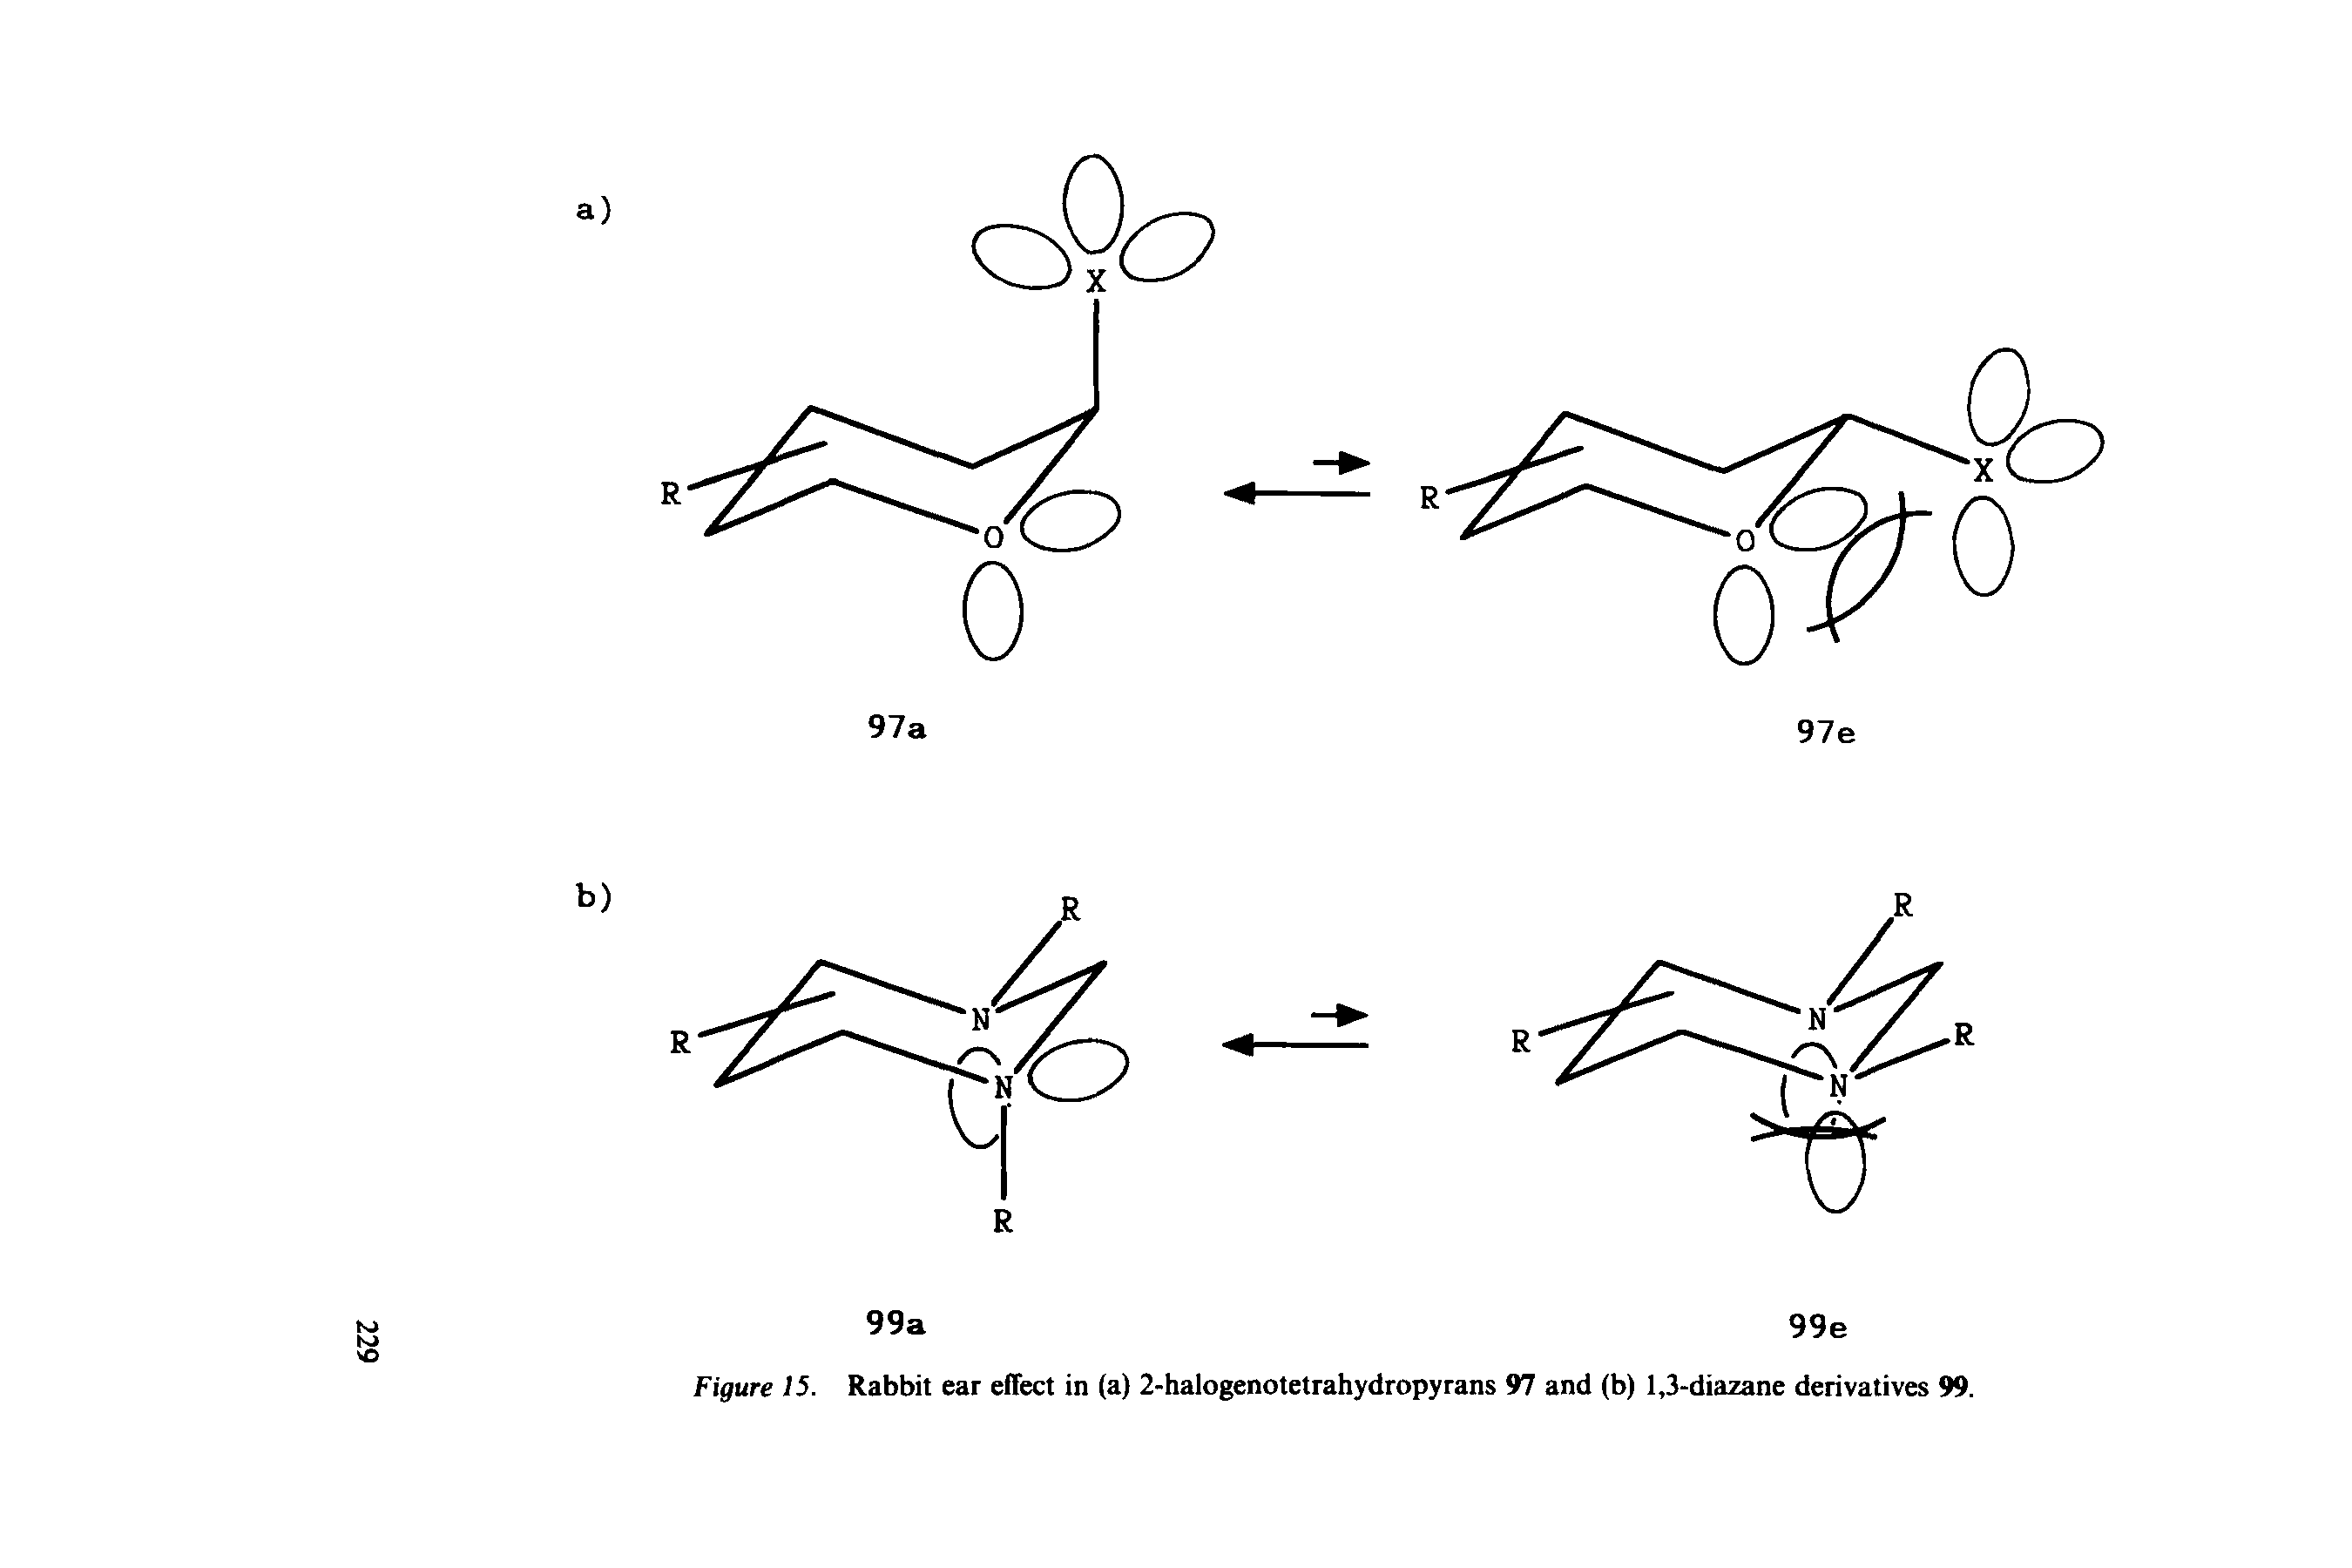 Figure 15. Rabbit ear effect in (a) 2-halogenotetrahydropyrans 97 and (b) 1,3-diazane derivatives 99.